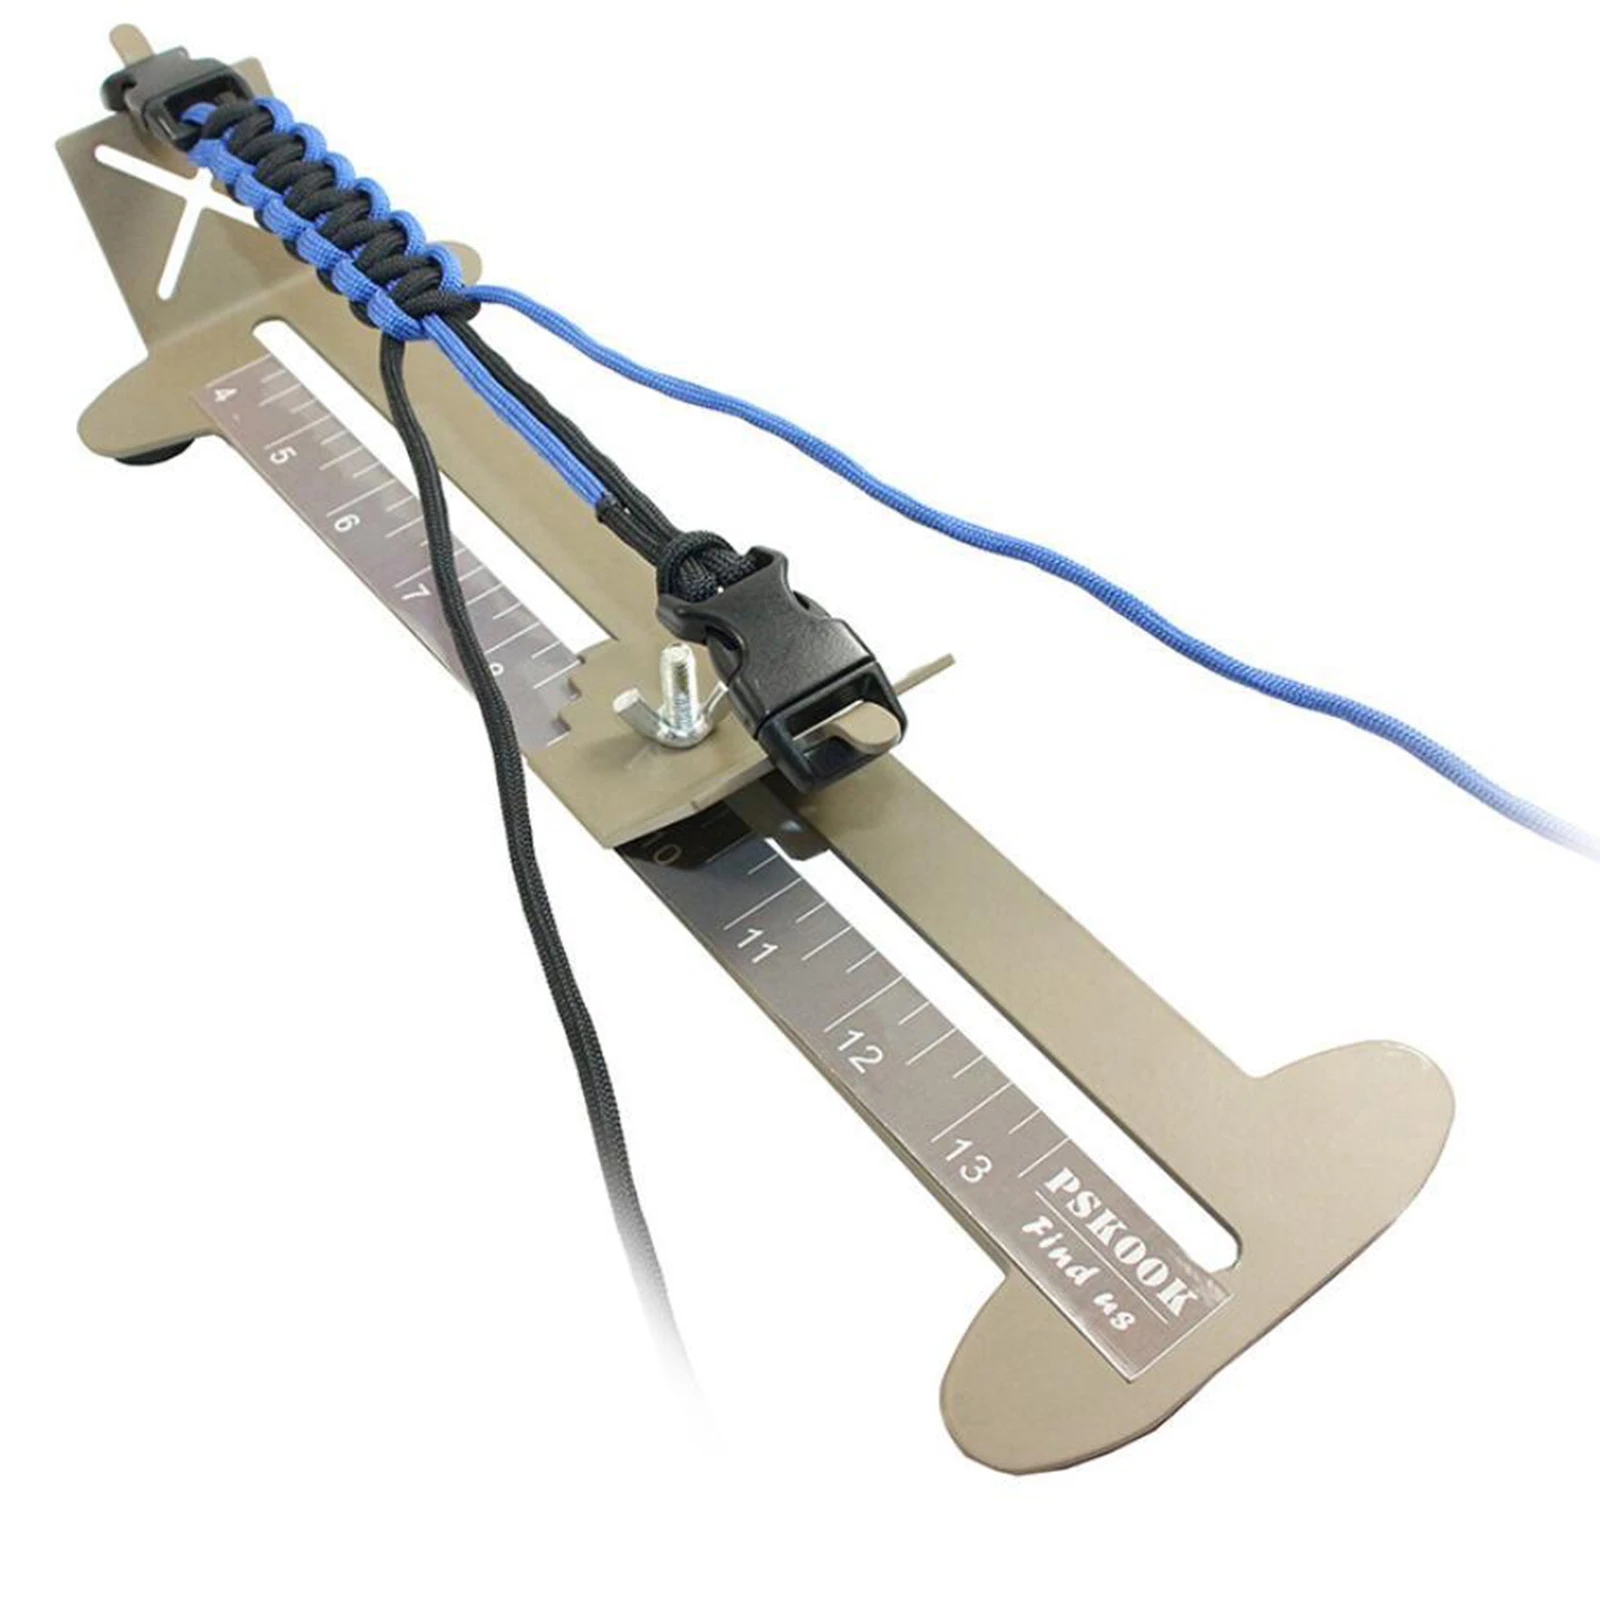 Paracord Bracelet Jig Kit Braiding Knitting Weaving Making Cord Knit Tool